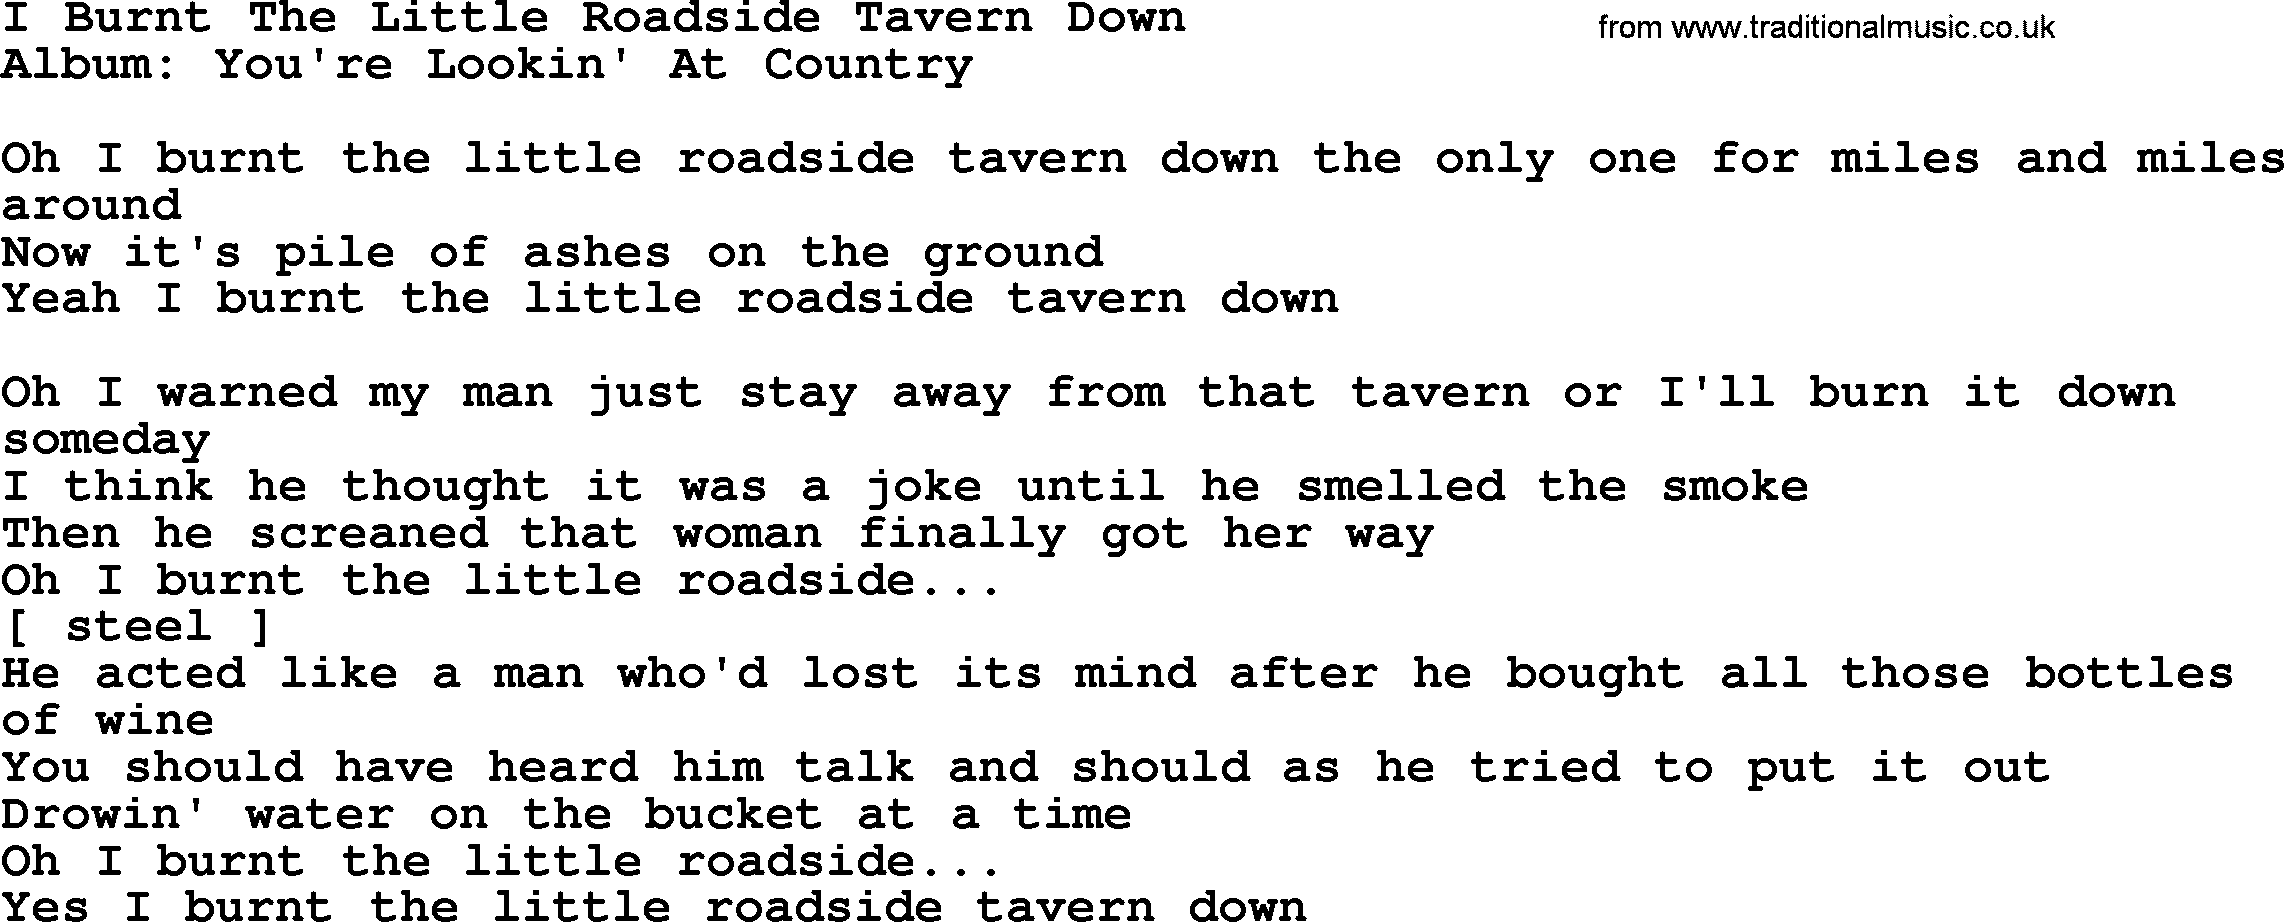 Loretta Lynn song: I Burnt The Little Roadside Tavern Down lyrics